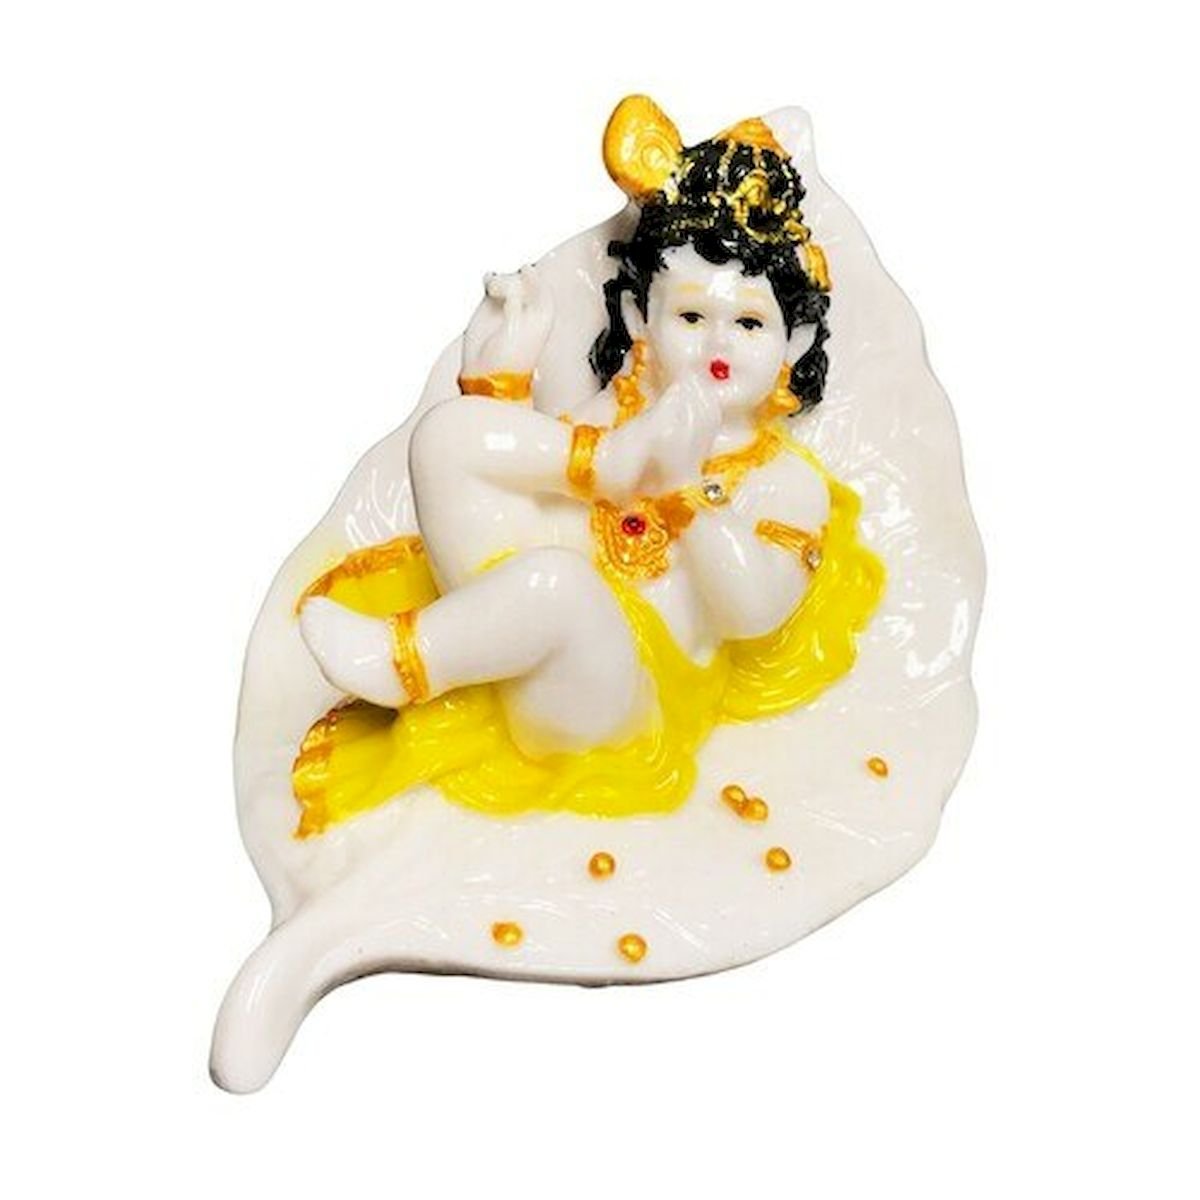 Picture of Mr. MJs HO-M3-17 Baby Krishna Figurine